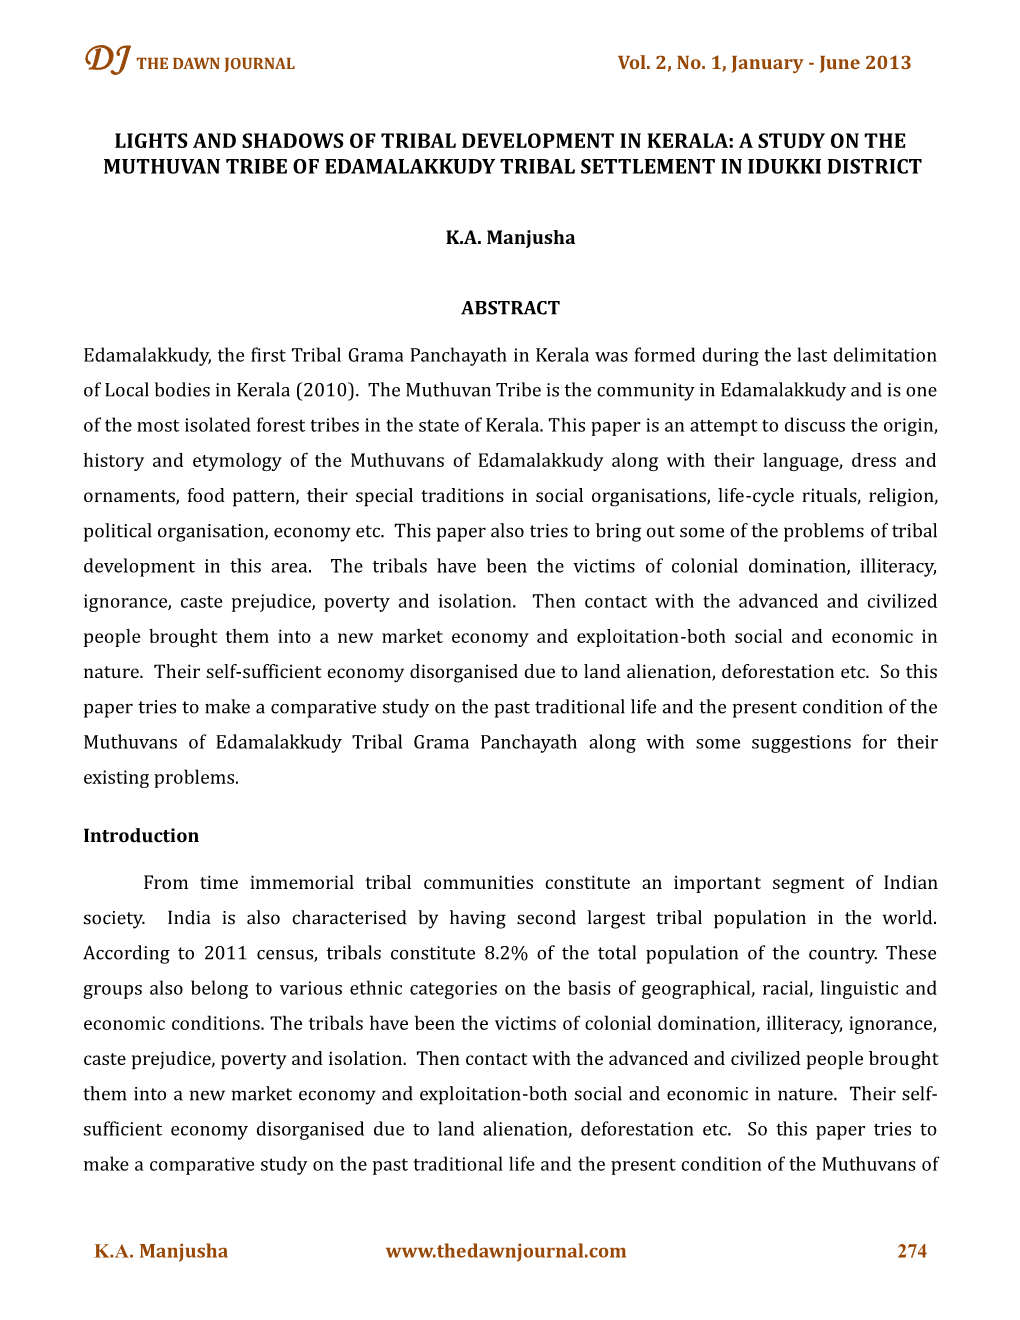 A Study on the Muthuvan Tribe of Edamalakkudy Tribal Settlement in Idukki District